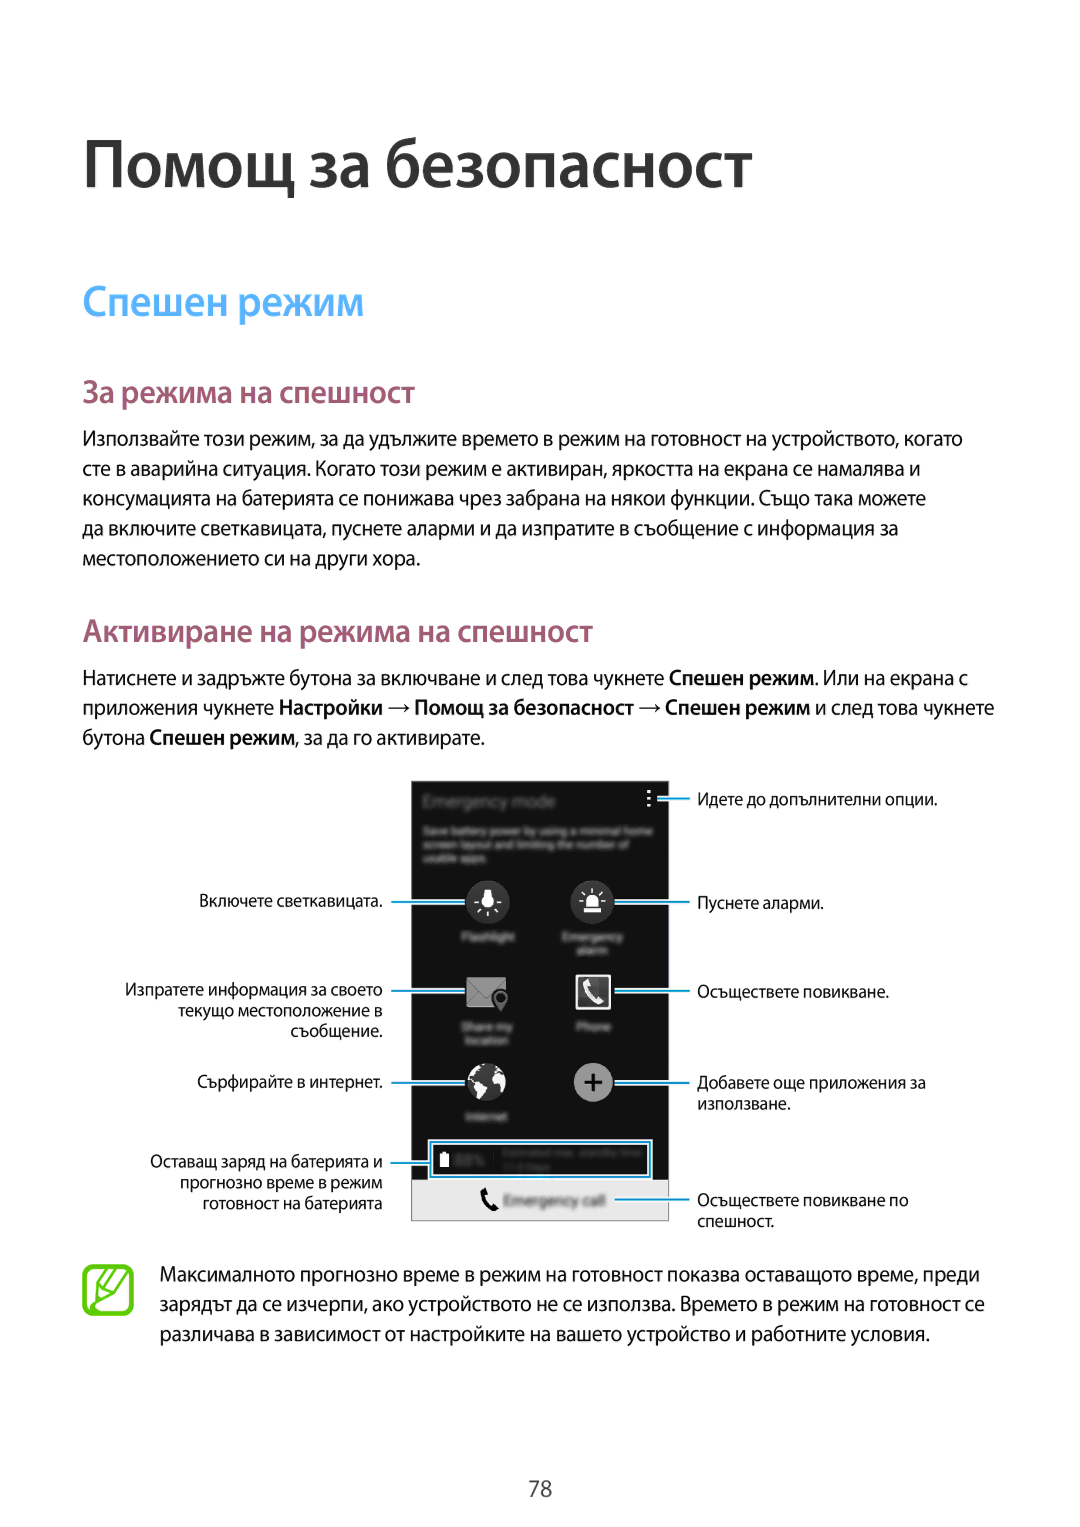 Samsung SM-A500FZDUBGL manual Помощ за безопасност, Спешен режим, За режима на спешност, Активиране на режима на спешност 